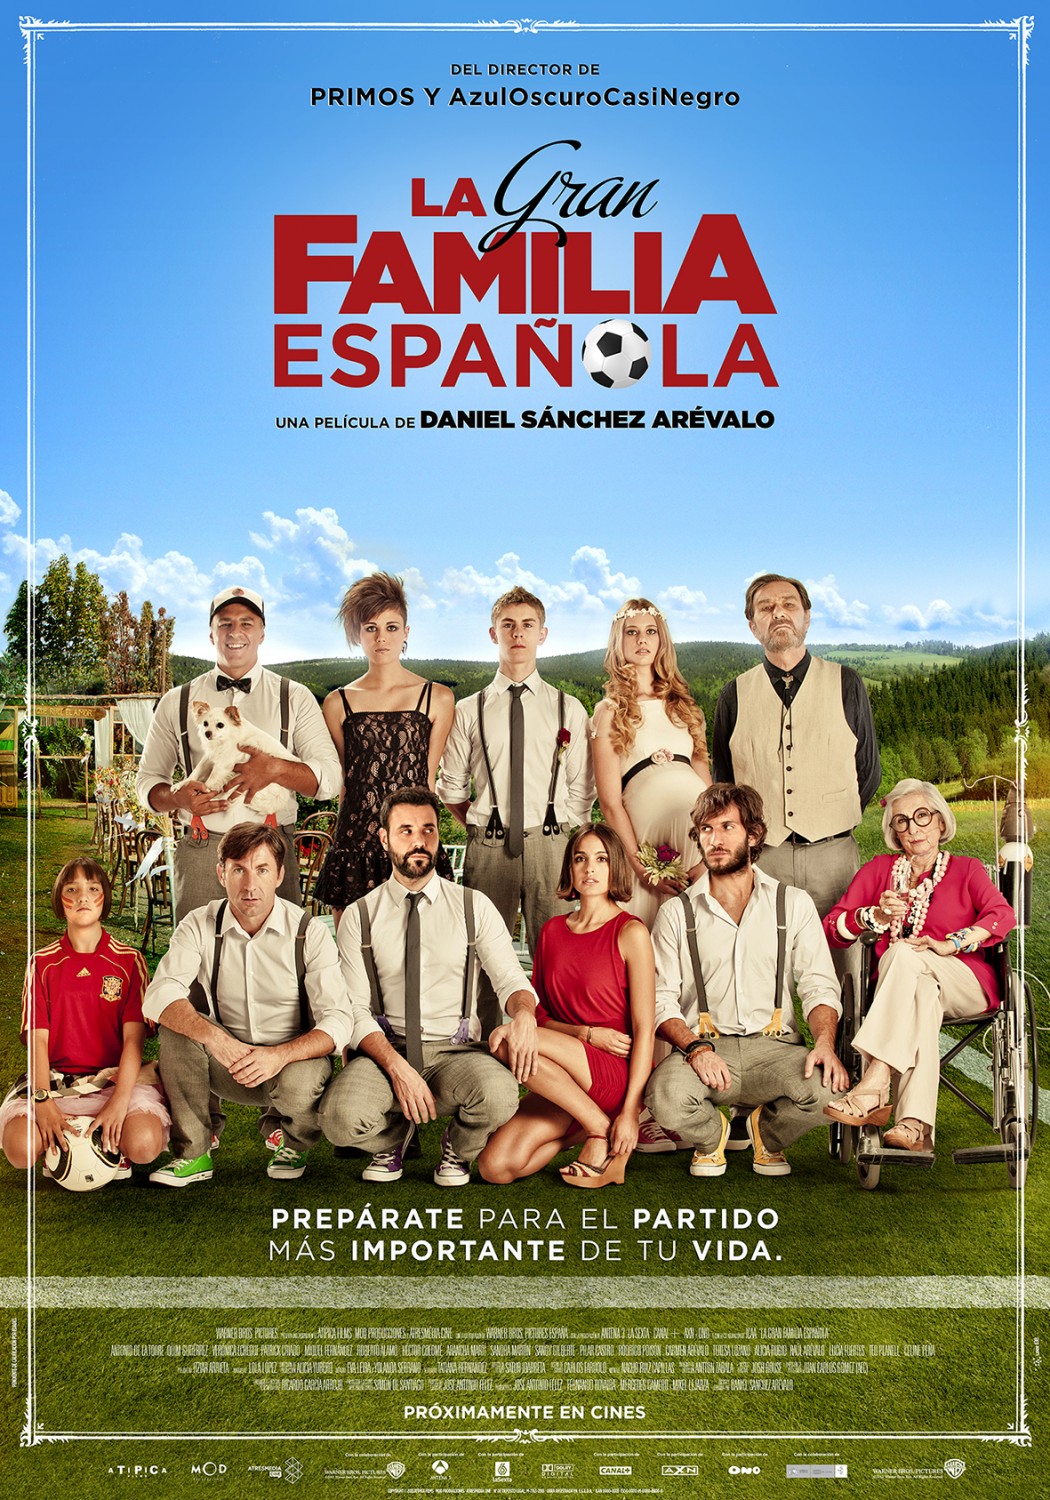 Extra Large Movie Poster Image for La gran familia española (#3 of 7)